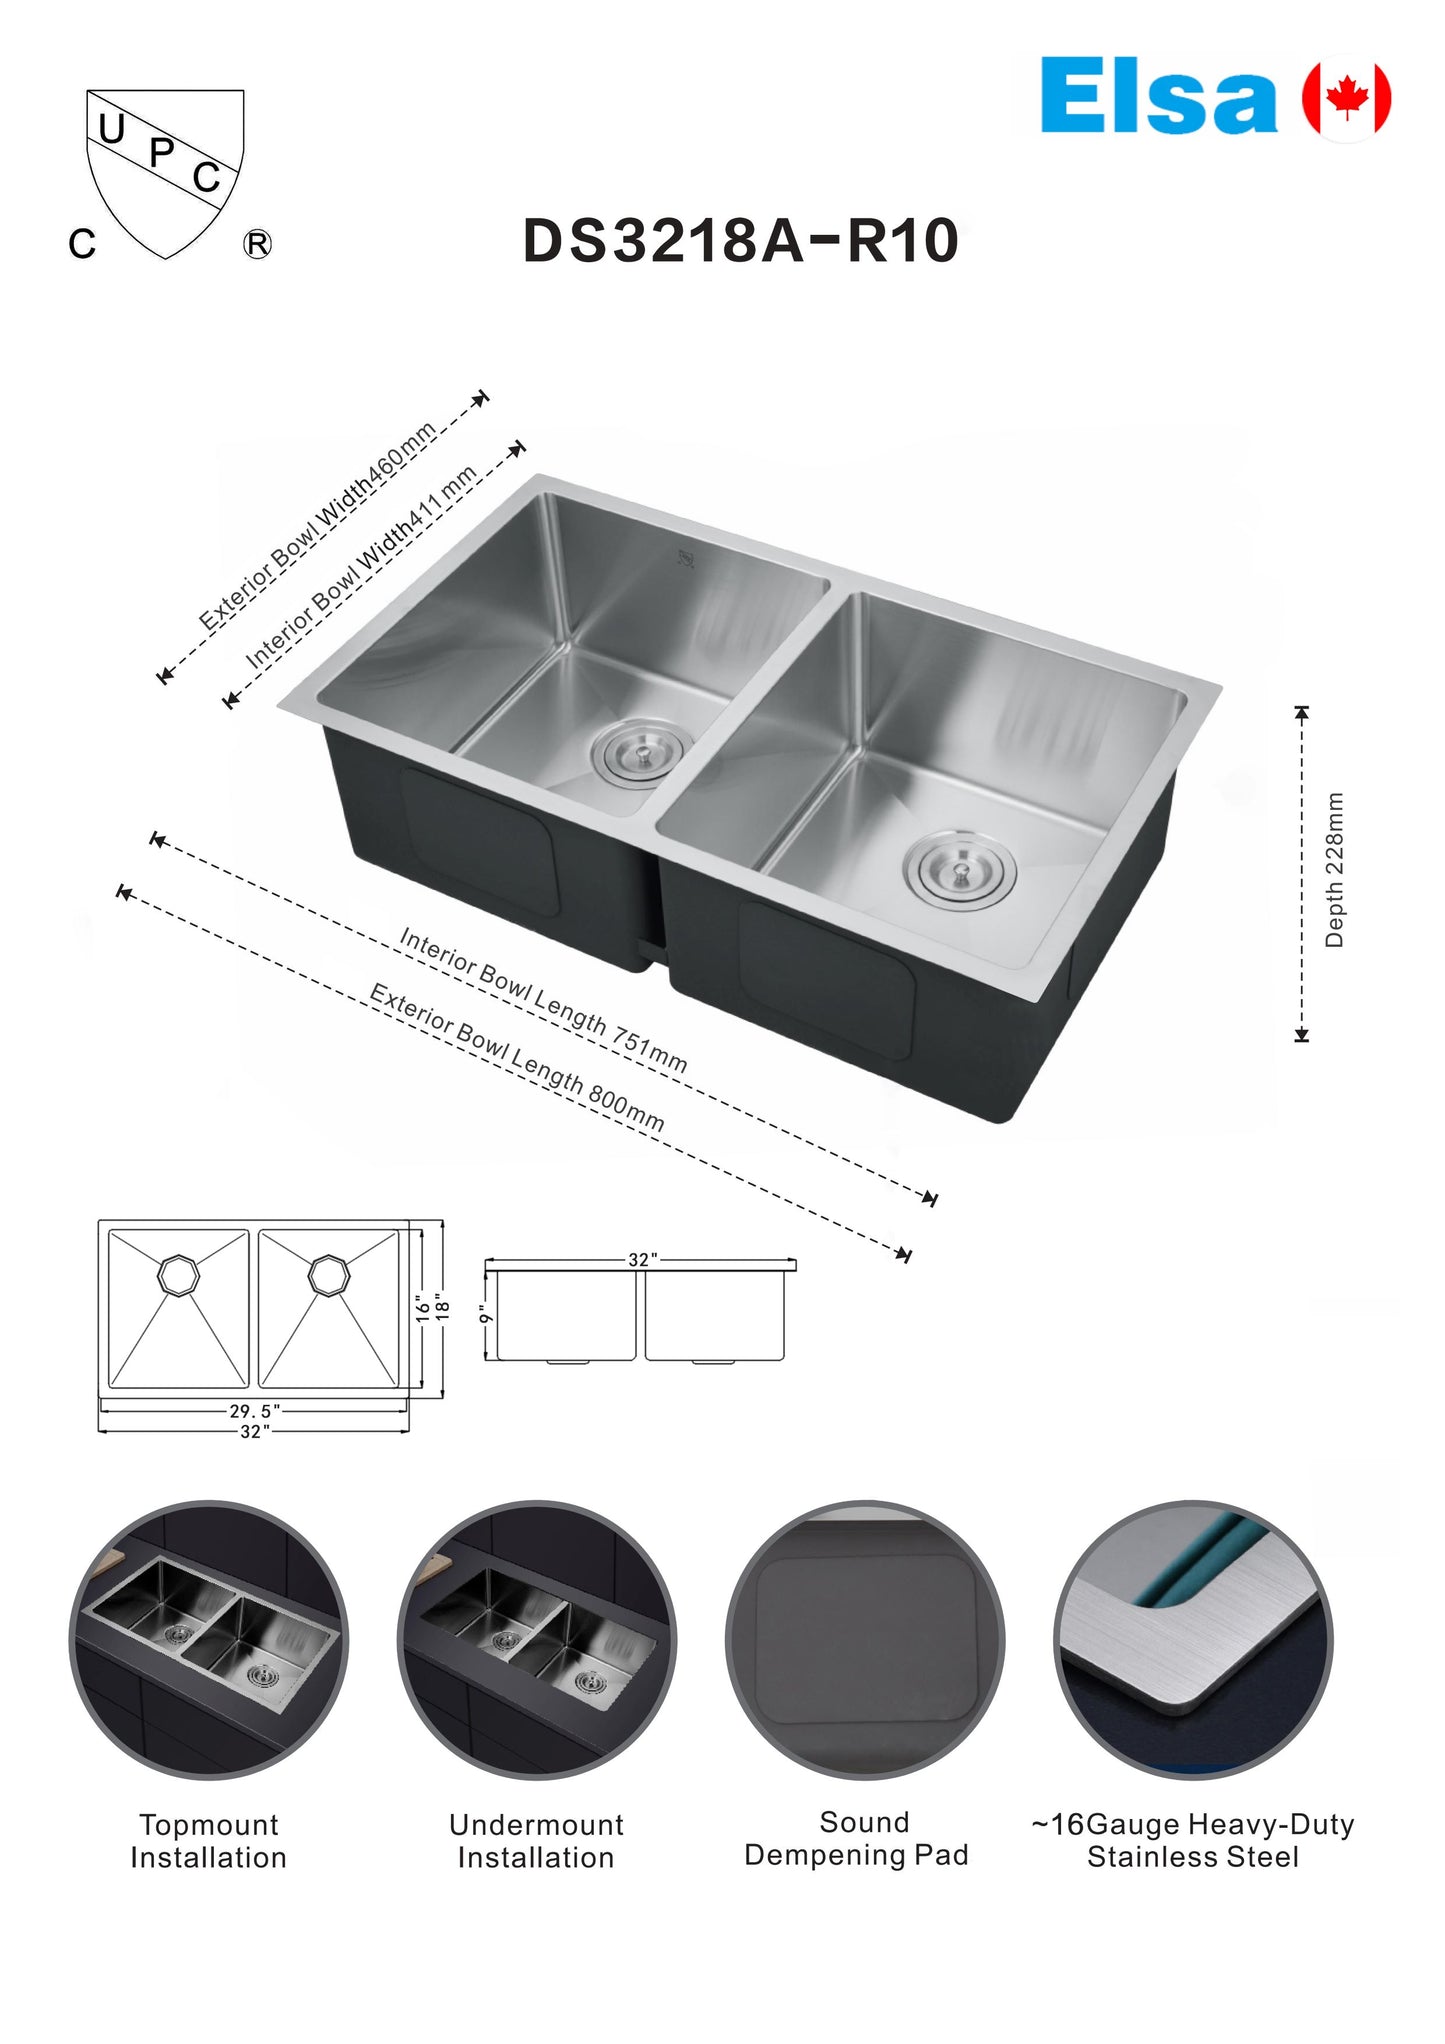 *BULK DEAL* DS3218a-R10 *White box* handmade kitchen sink undermount double bowl 16 gauged (drains not included)800x460x228mm (31-1/2"x18"x9") inside 29-1/2"x16.18"x9" $139/PC bulk Deal 10pcs+ $129/pc